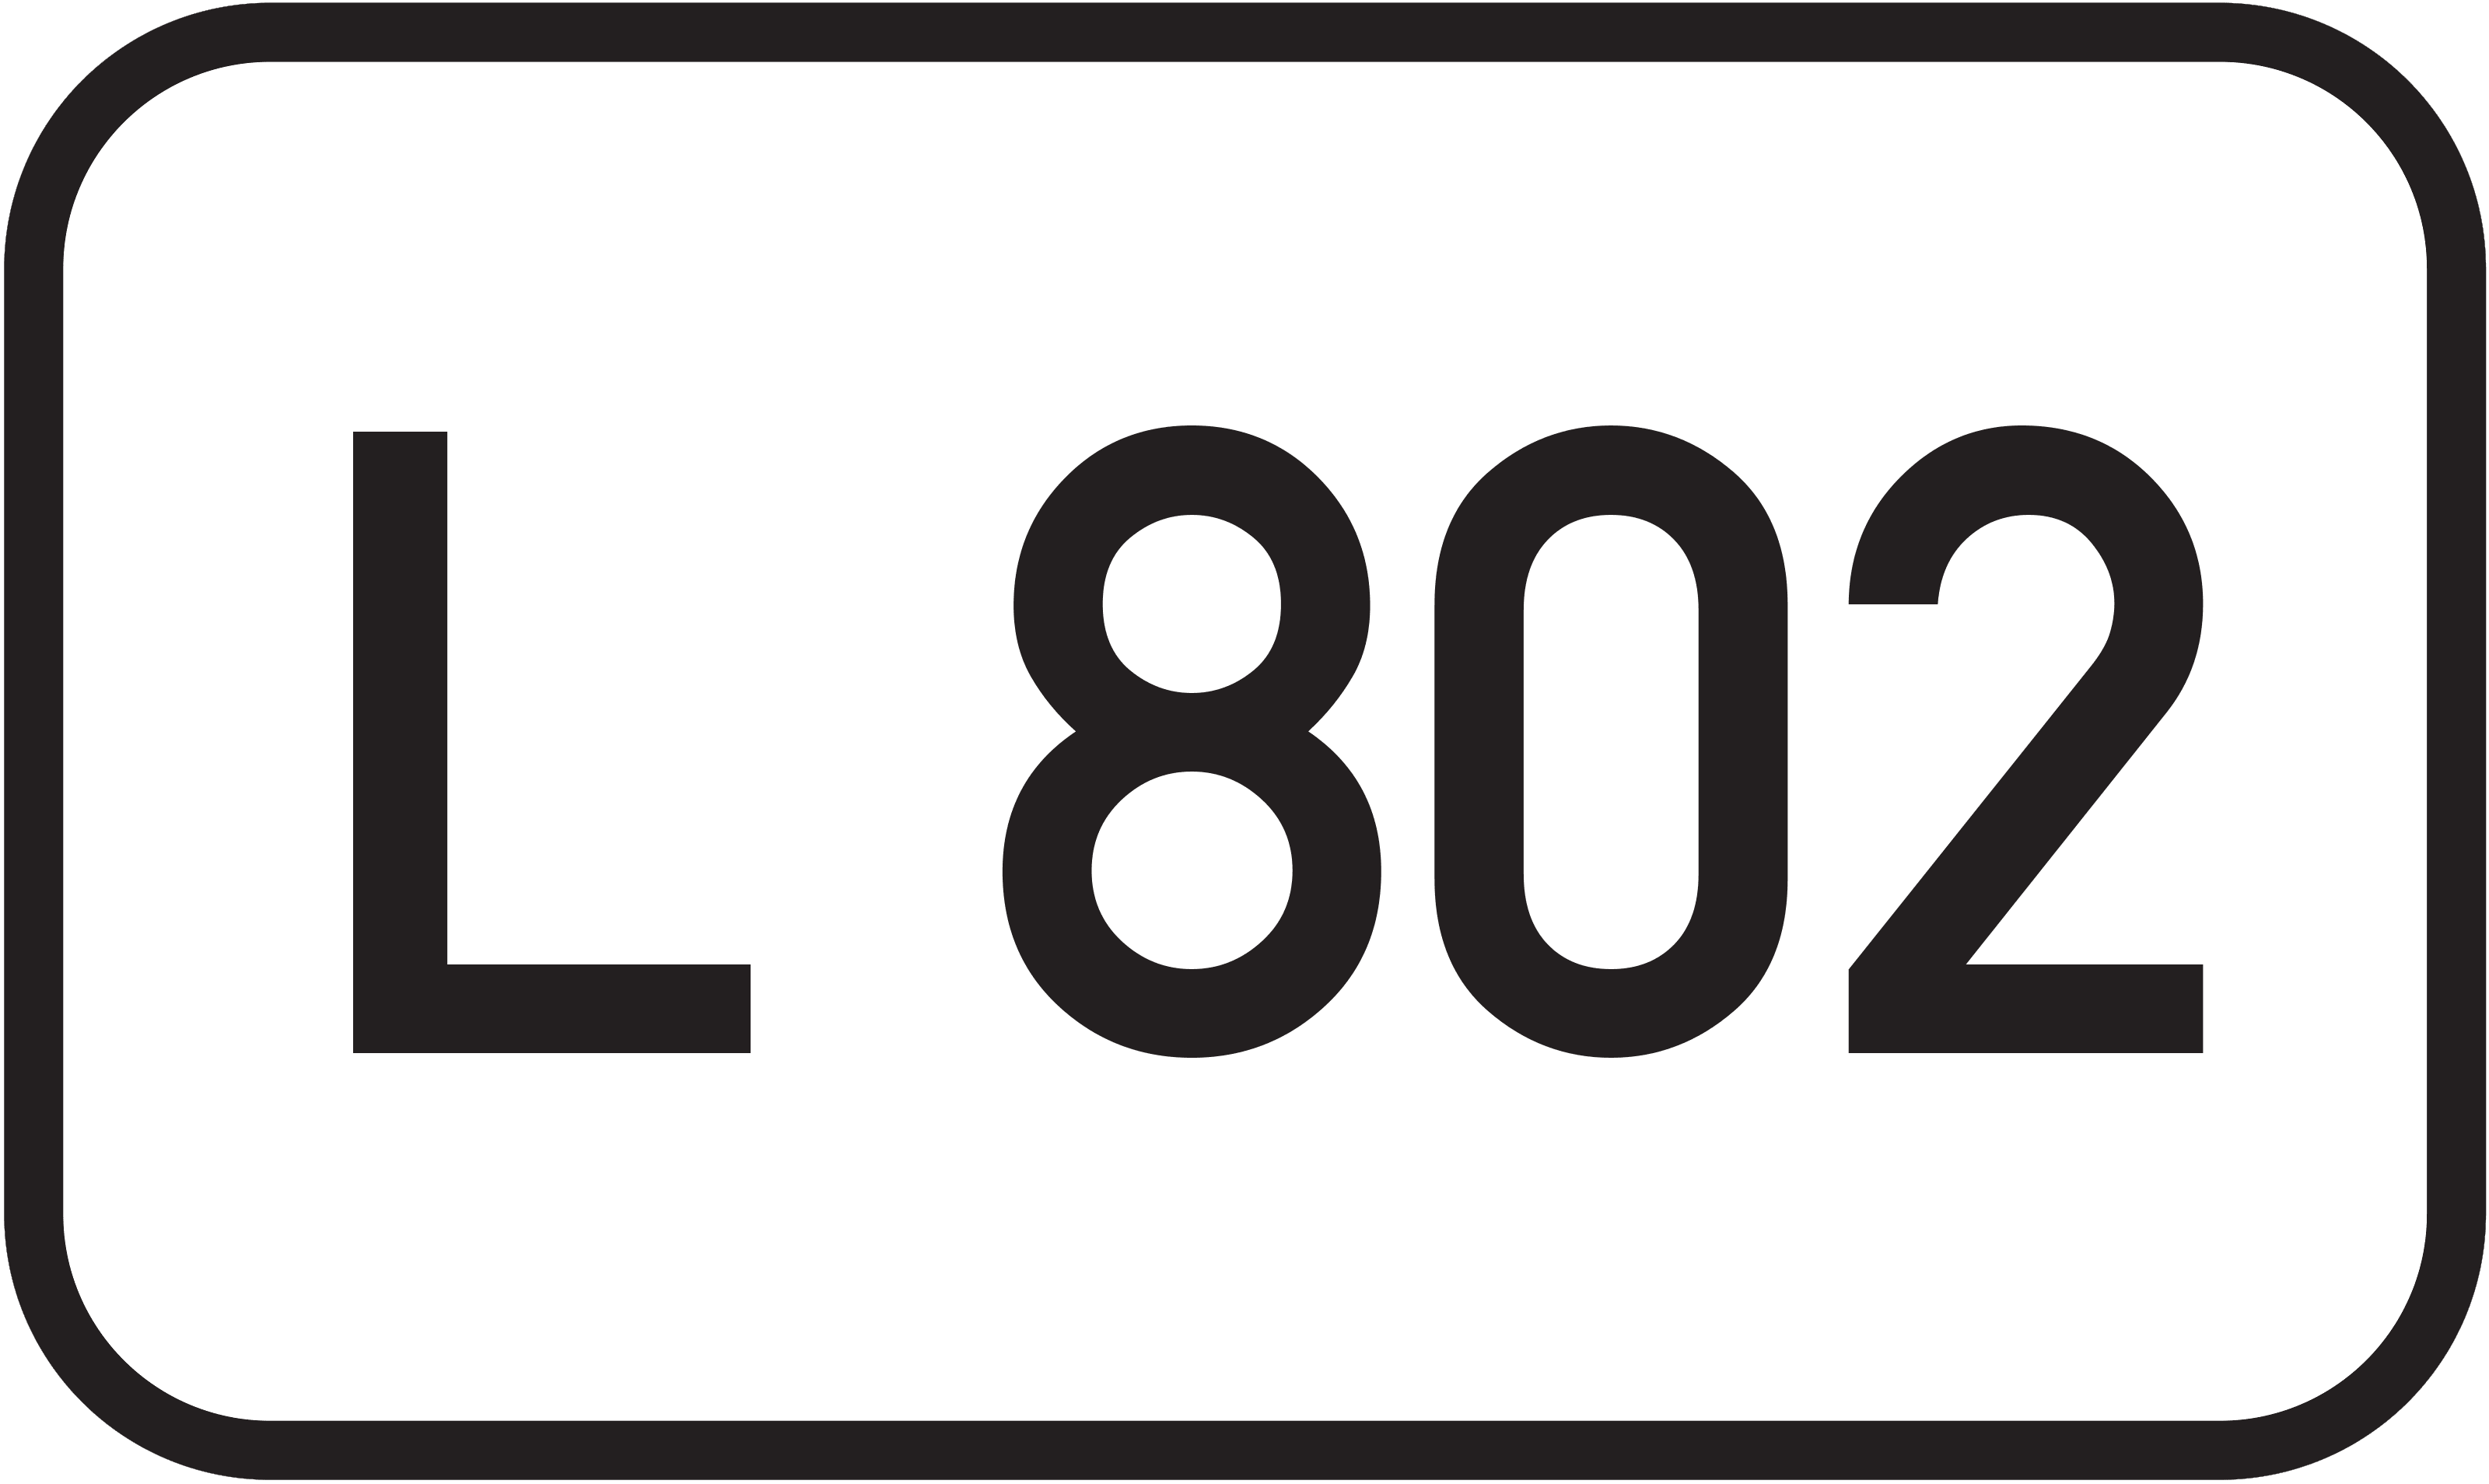 Straßenschild Landesstraße L 802